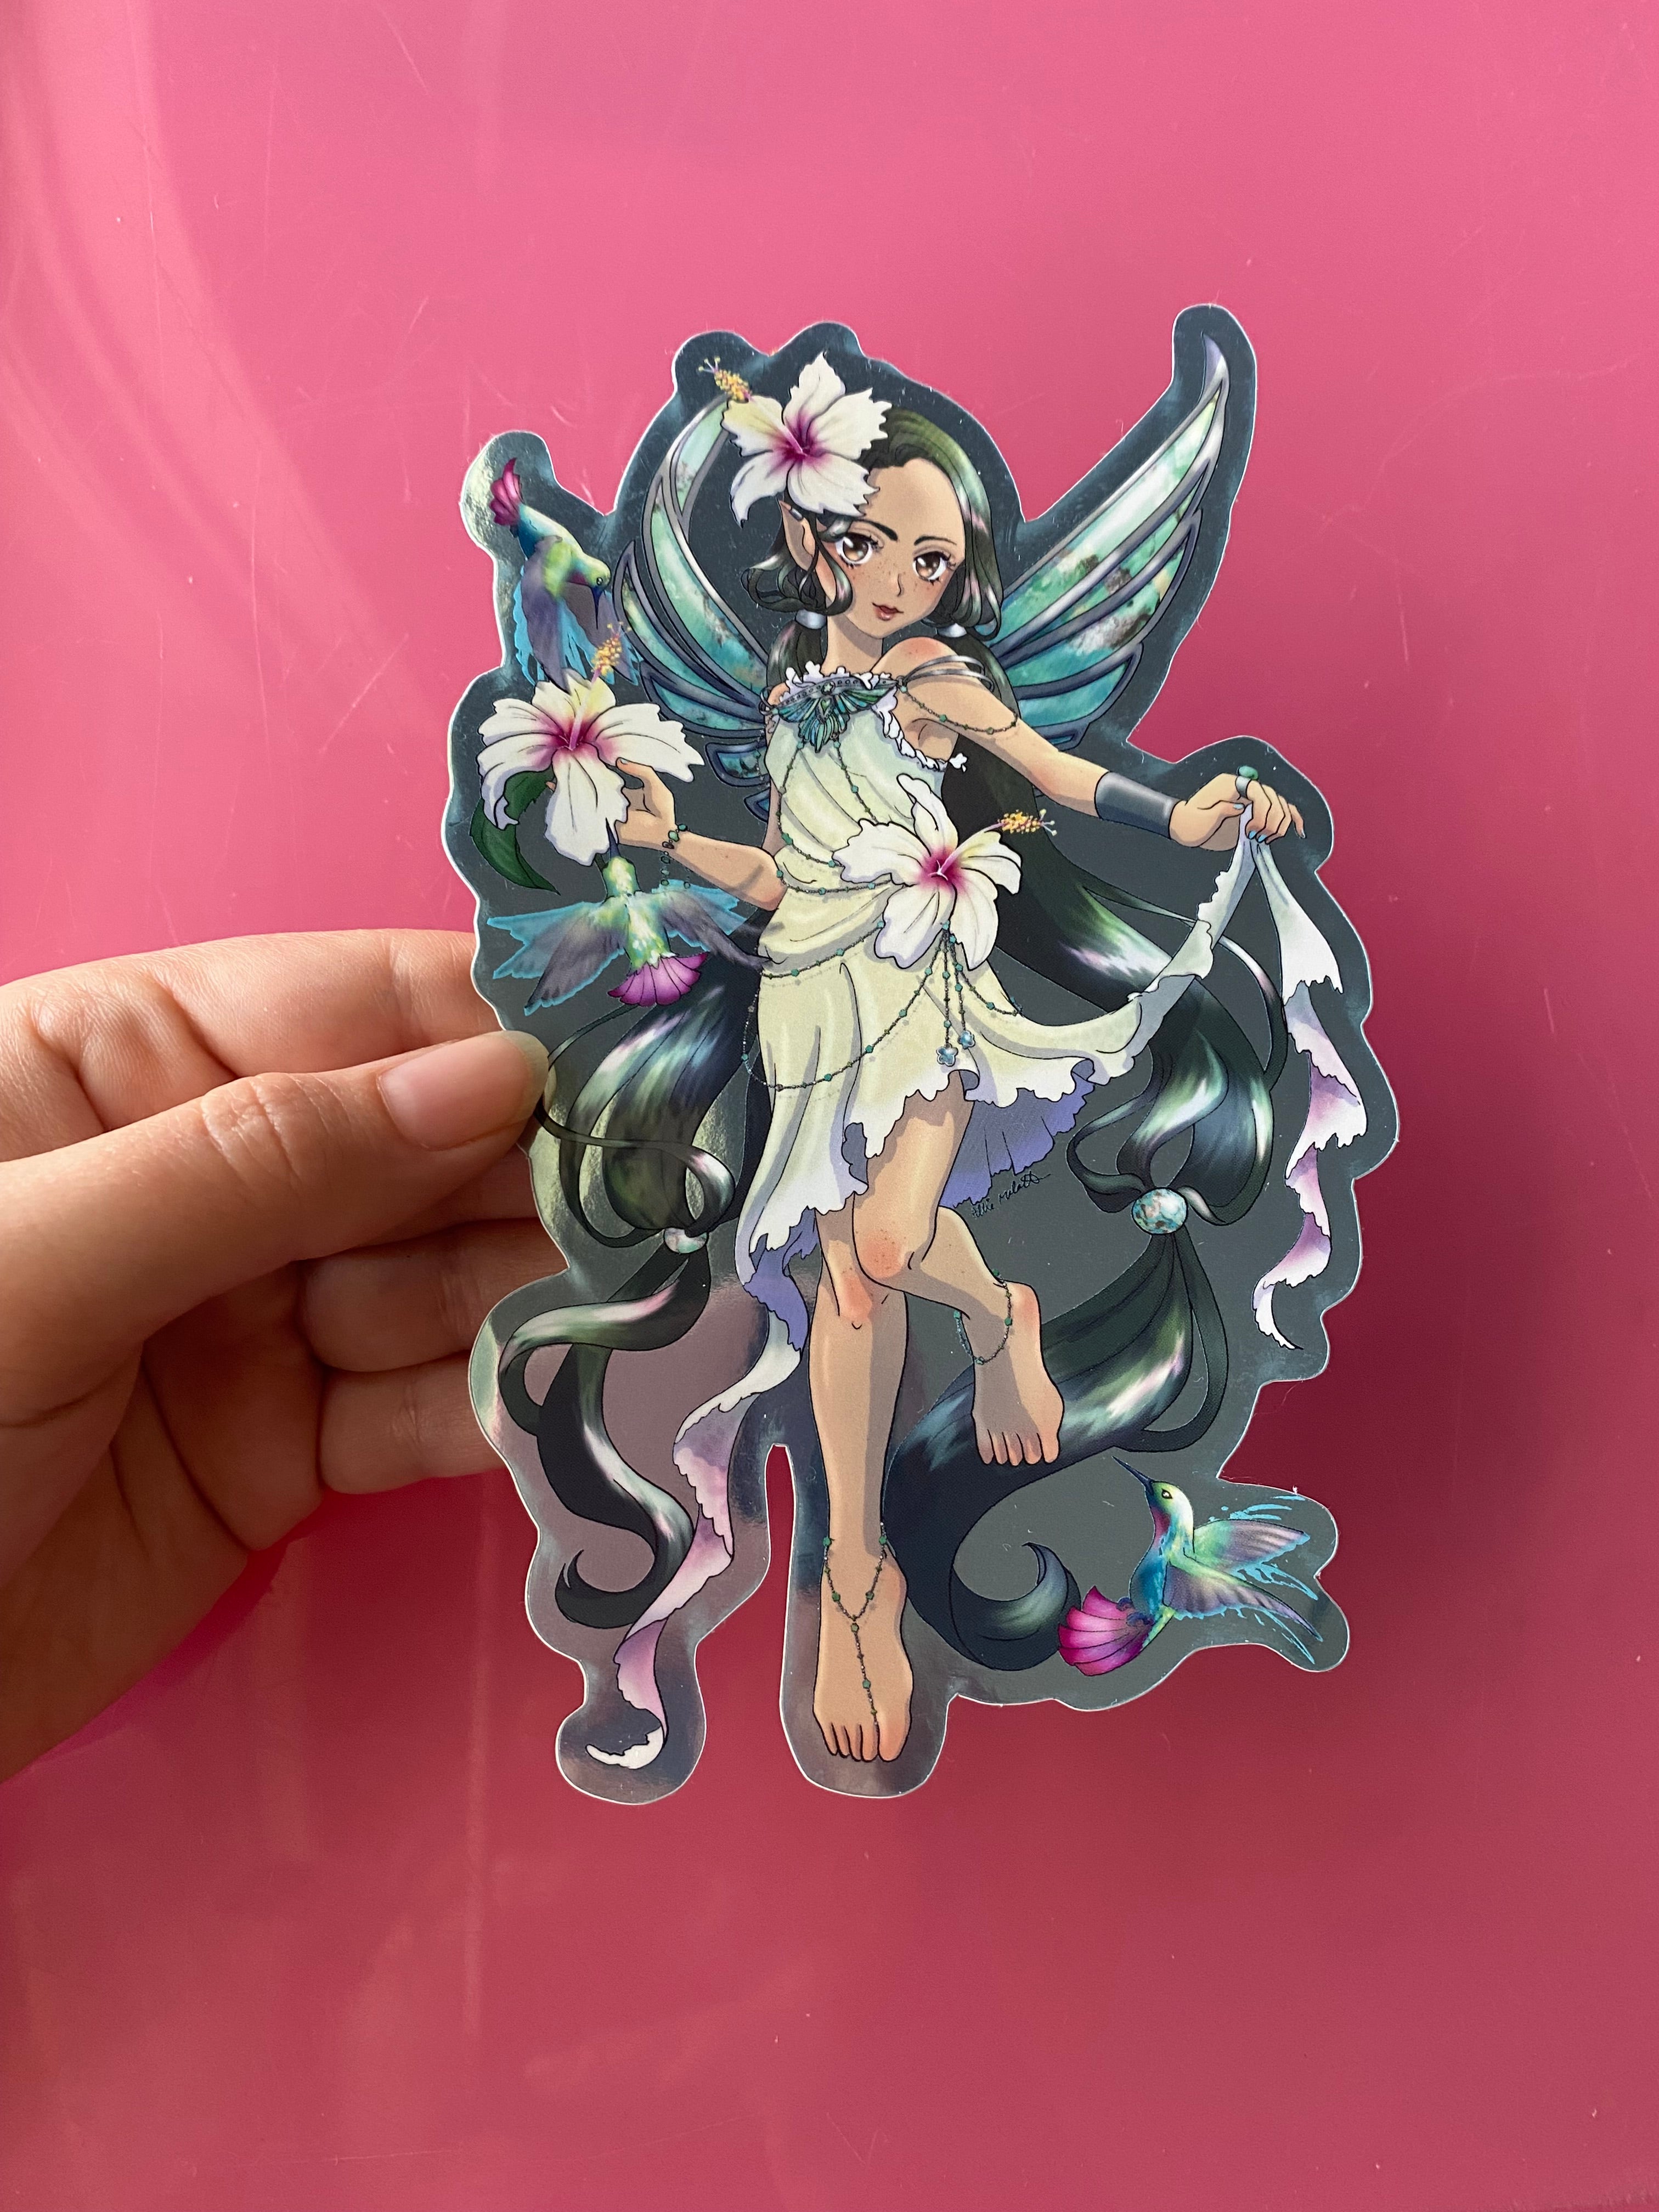 large 6 x 4 Holographic vinyl sticker - Turquoise fairy Hummingbird December gemstone birthstone farie fantasy manga anime art